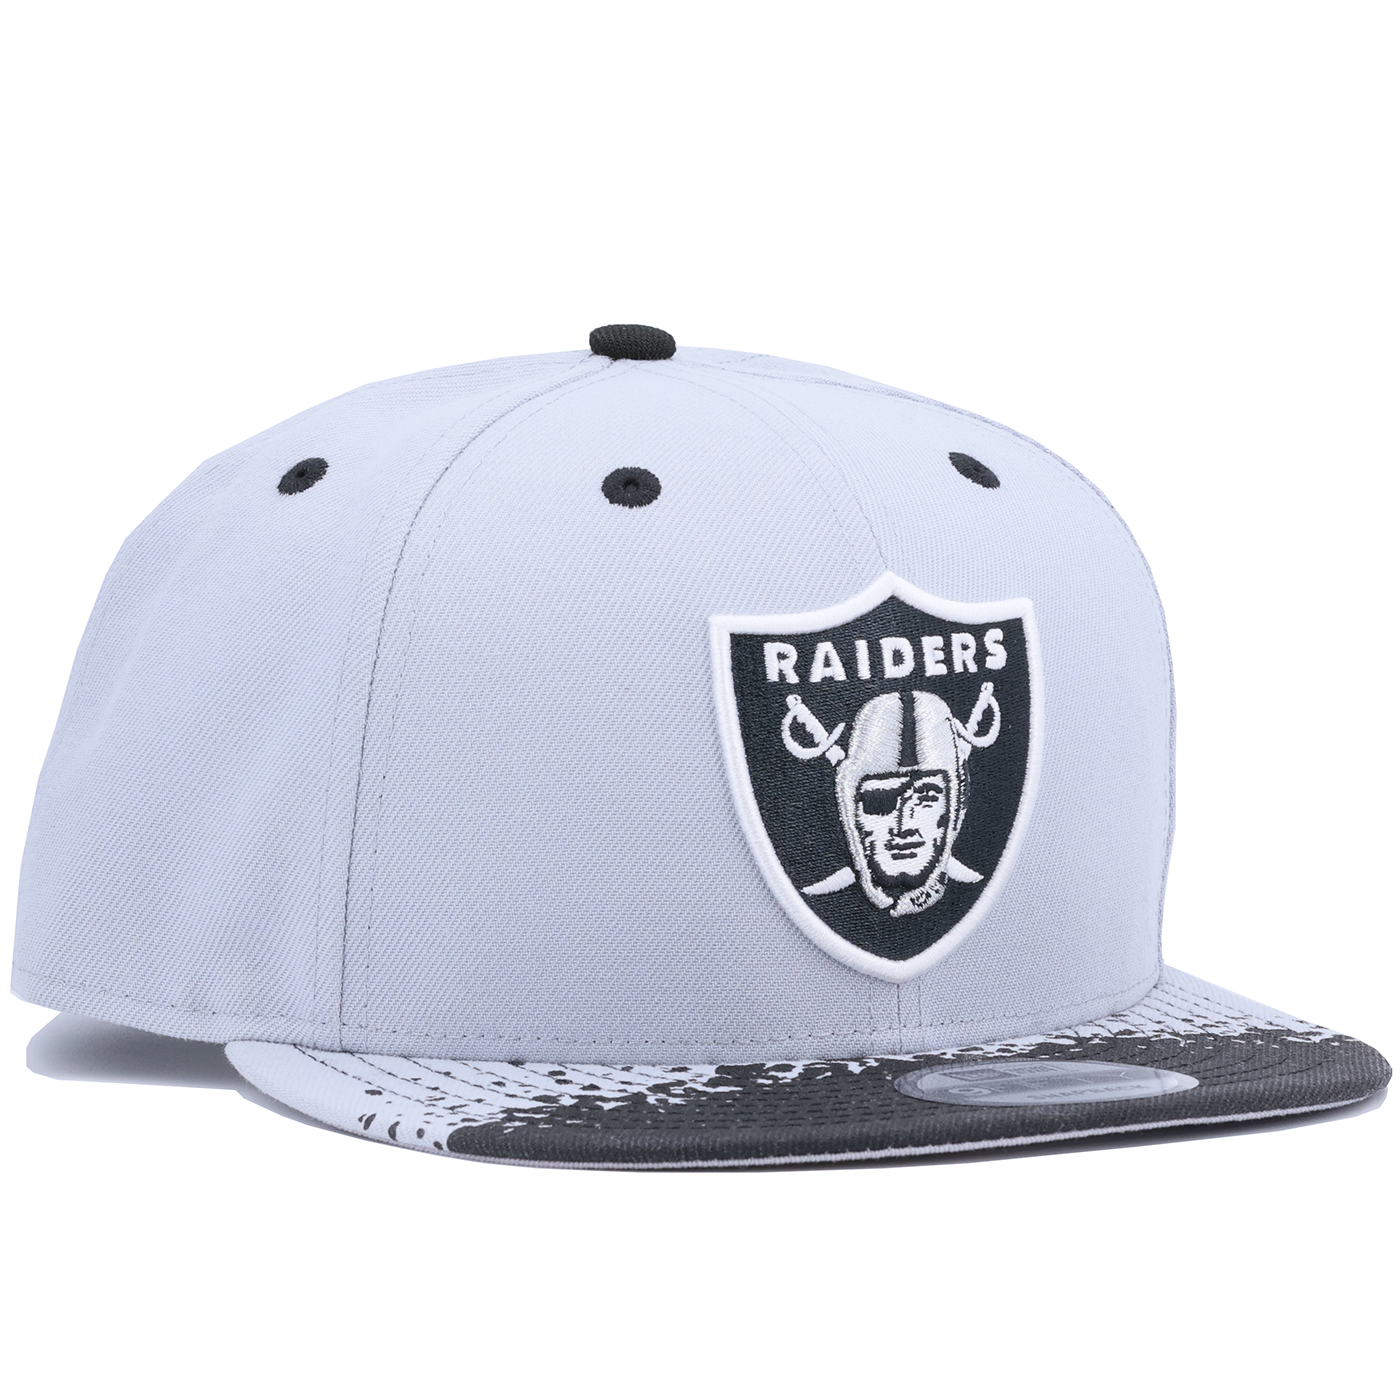 Las Vegas Raiders Snapback New Era 9FIFTY Block Out Black Hat Cap